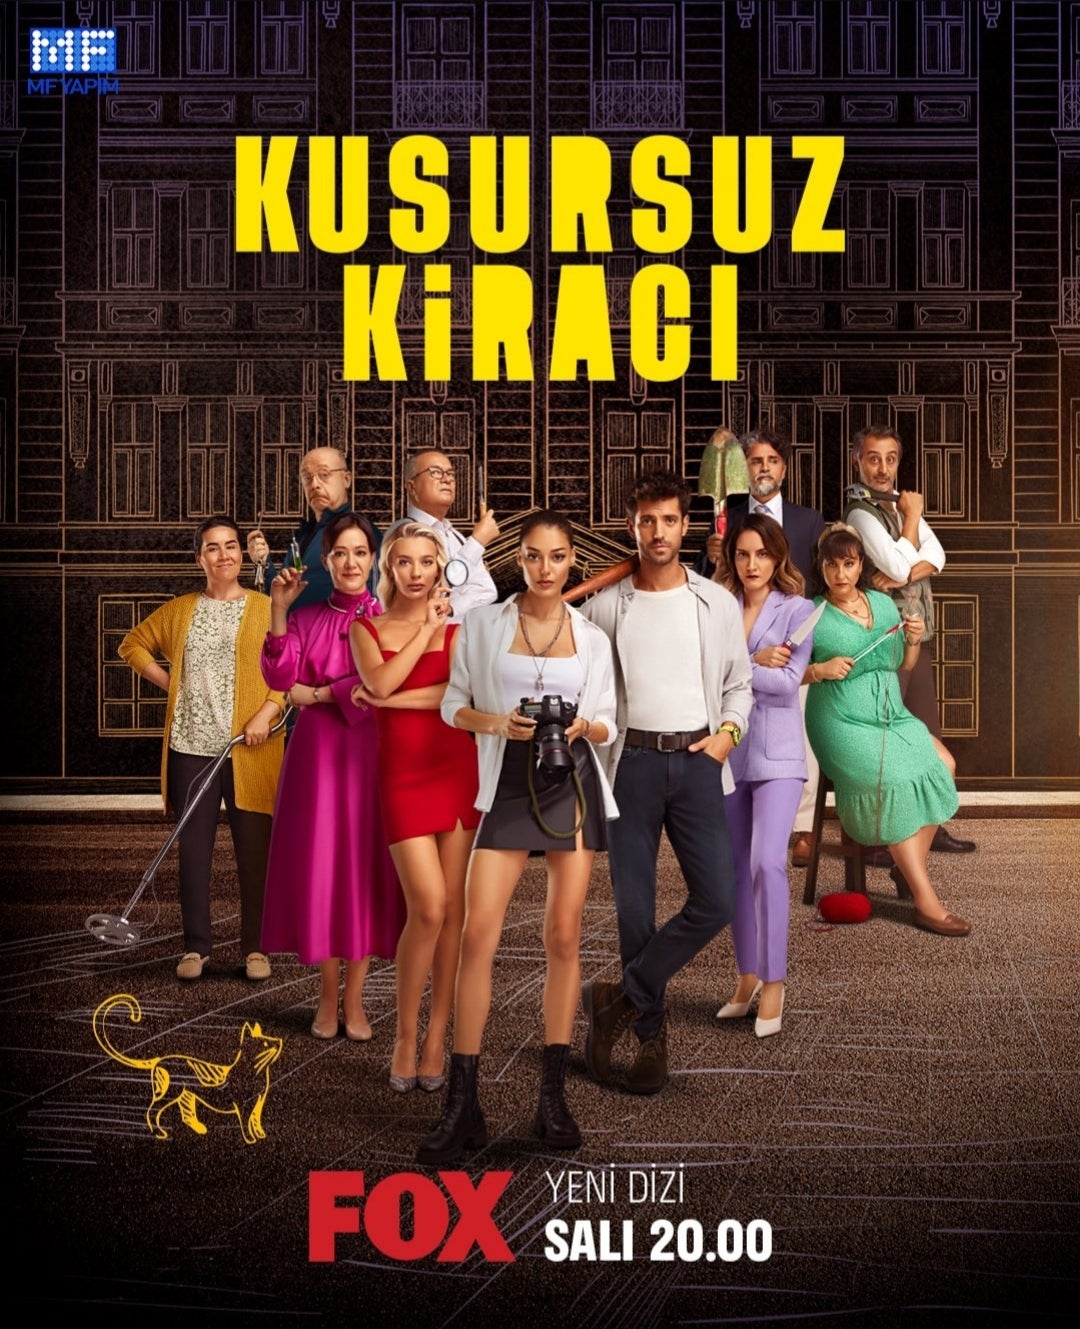 TV ratings for Kusursuz Kiraci in Argentina. FOX Türkiye TV series